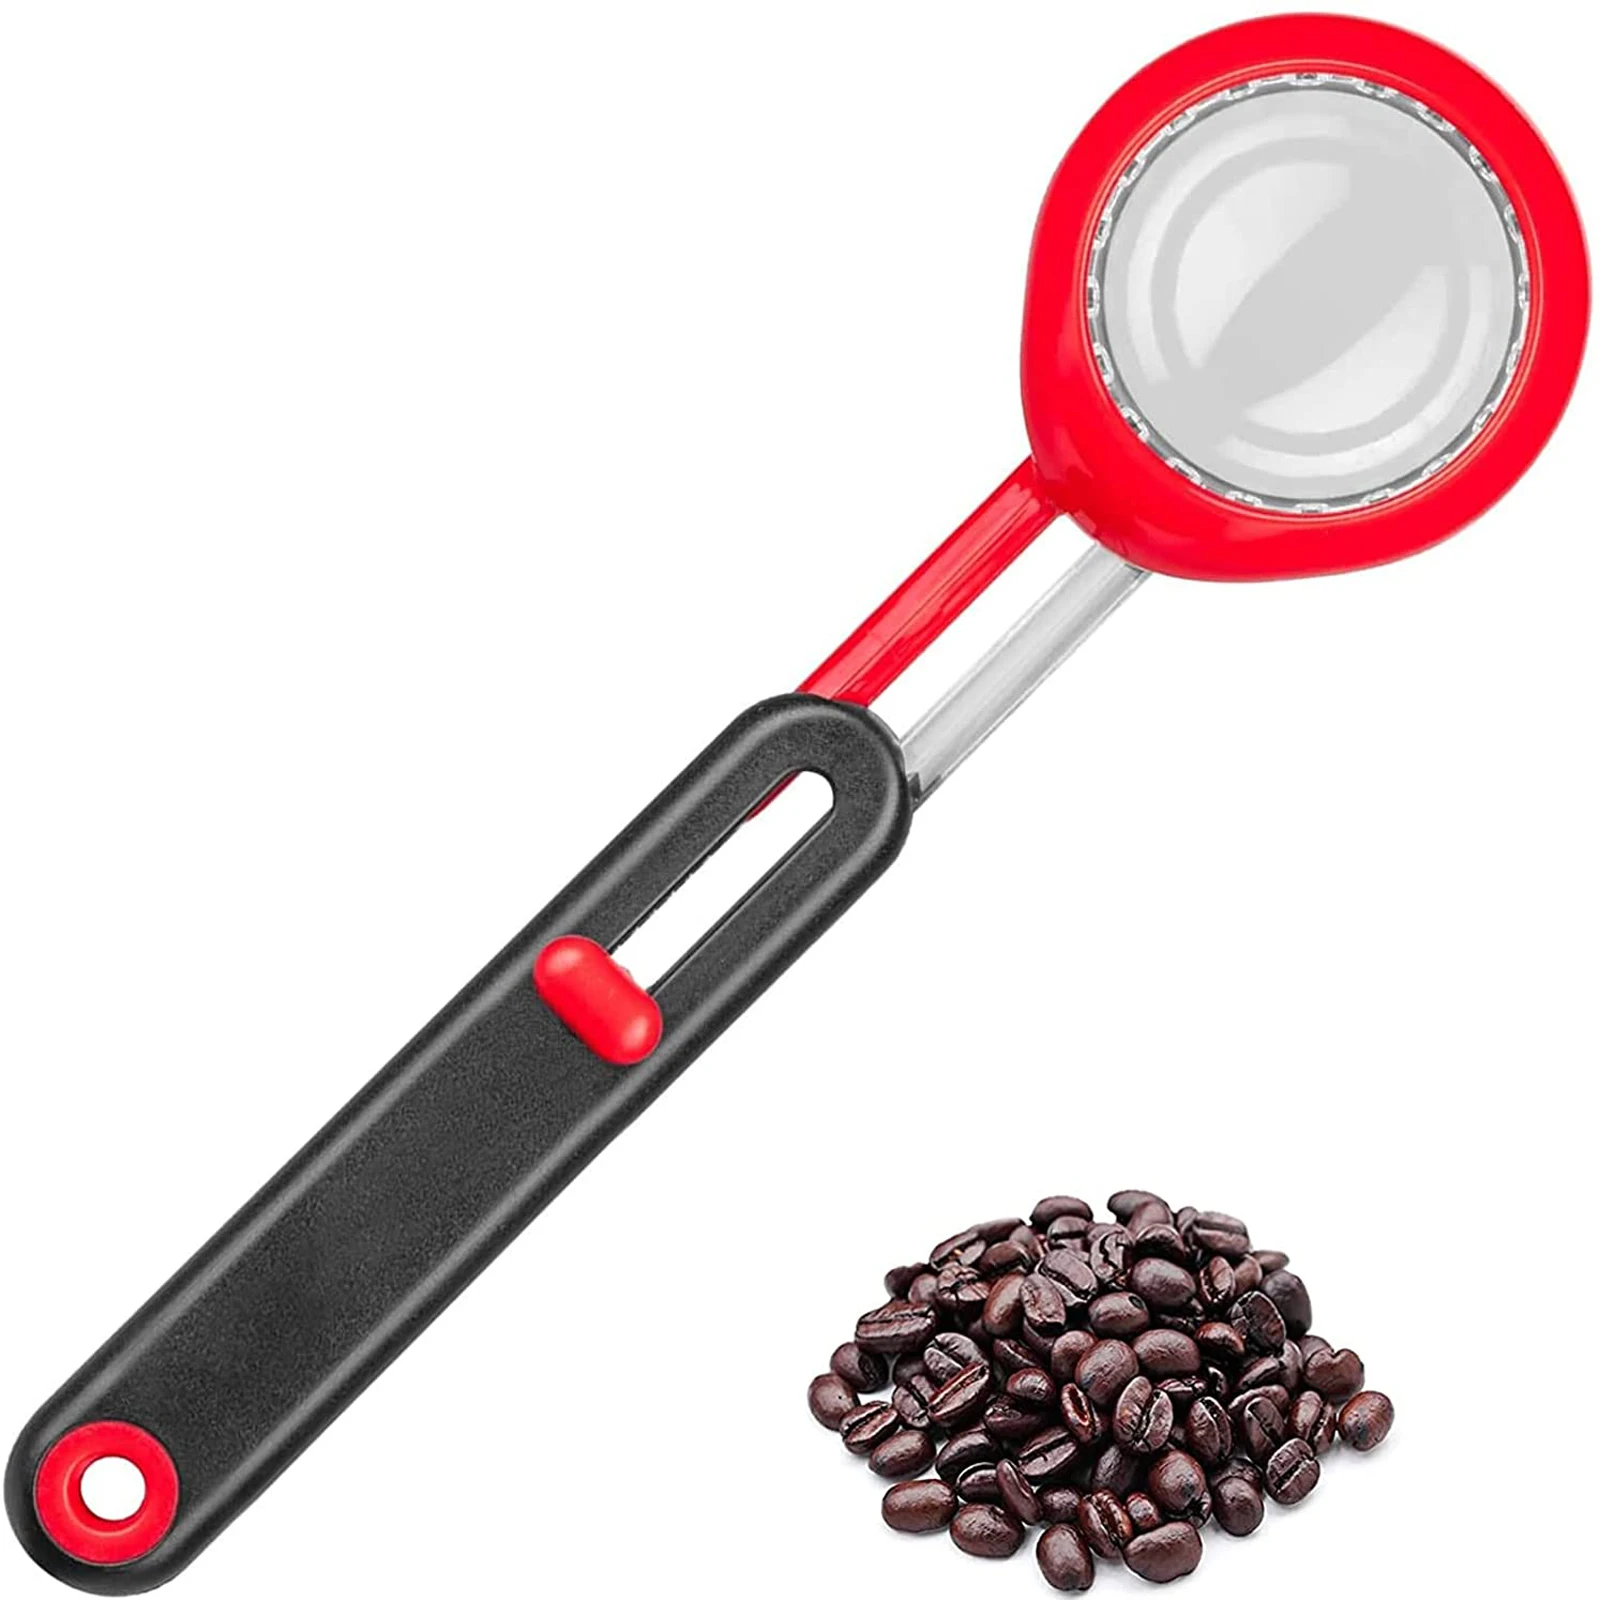 

Adjustable Lever Measuring Spoon Coffee Measurer Scoop with Ergonomic Handle Coffee Protein Powder Leveling Measuring Spoon